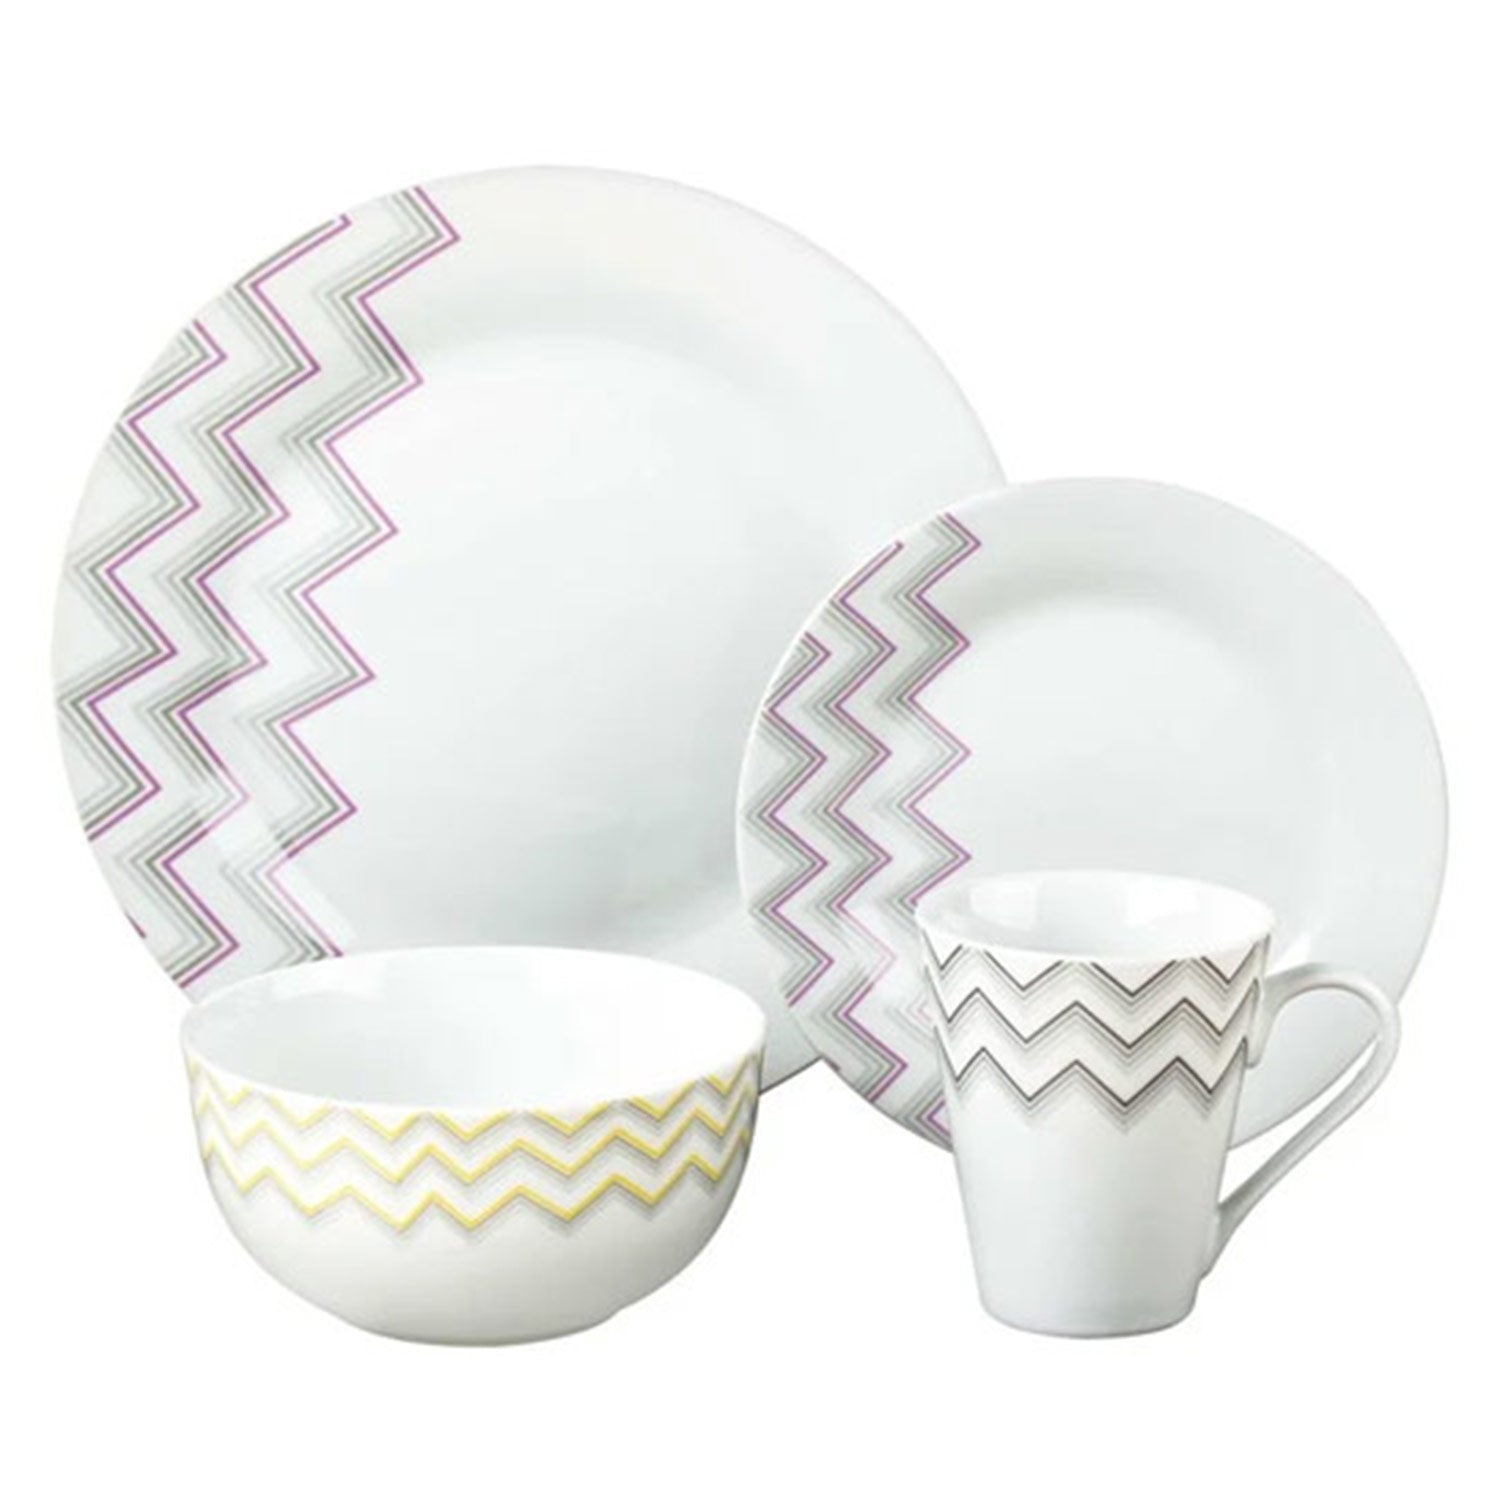 PREMIUS 16 Piece Ceramic Dinner Set, Heat Resistant Porcelain